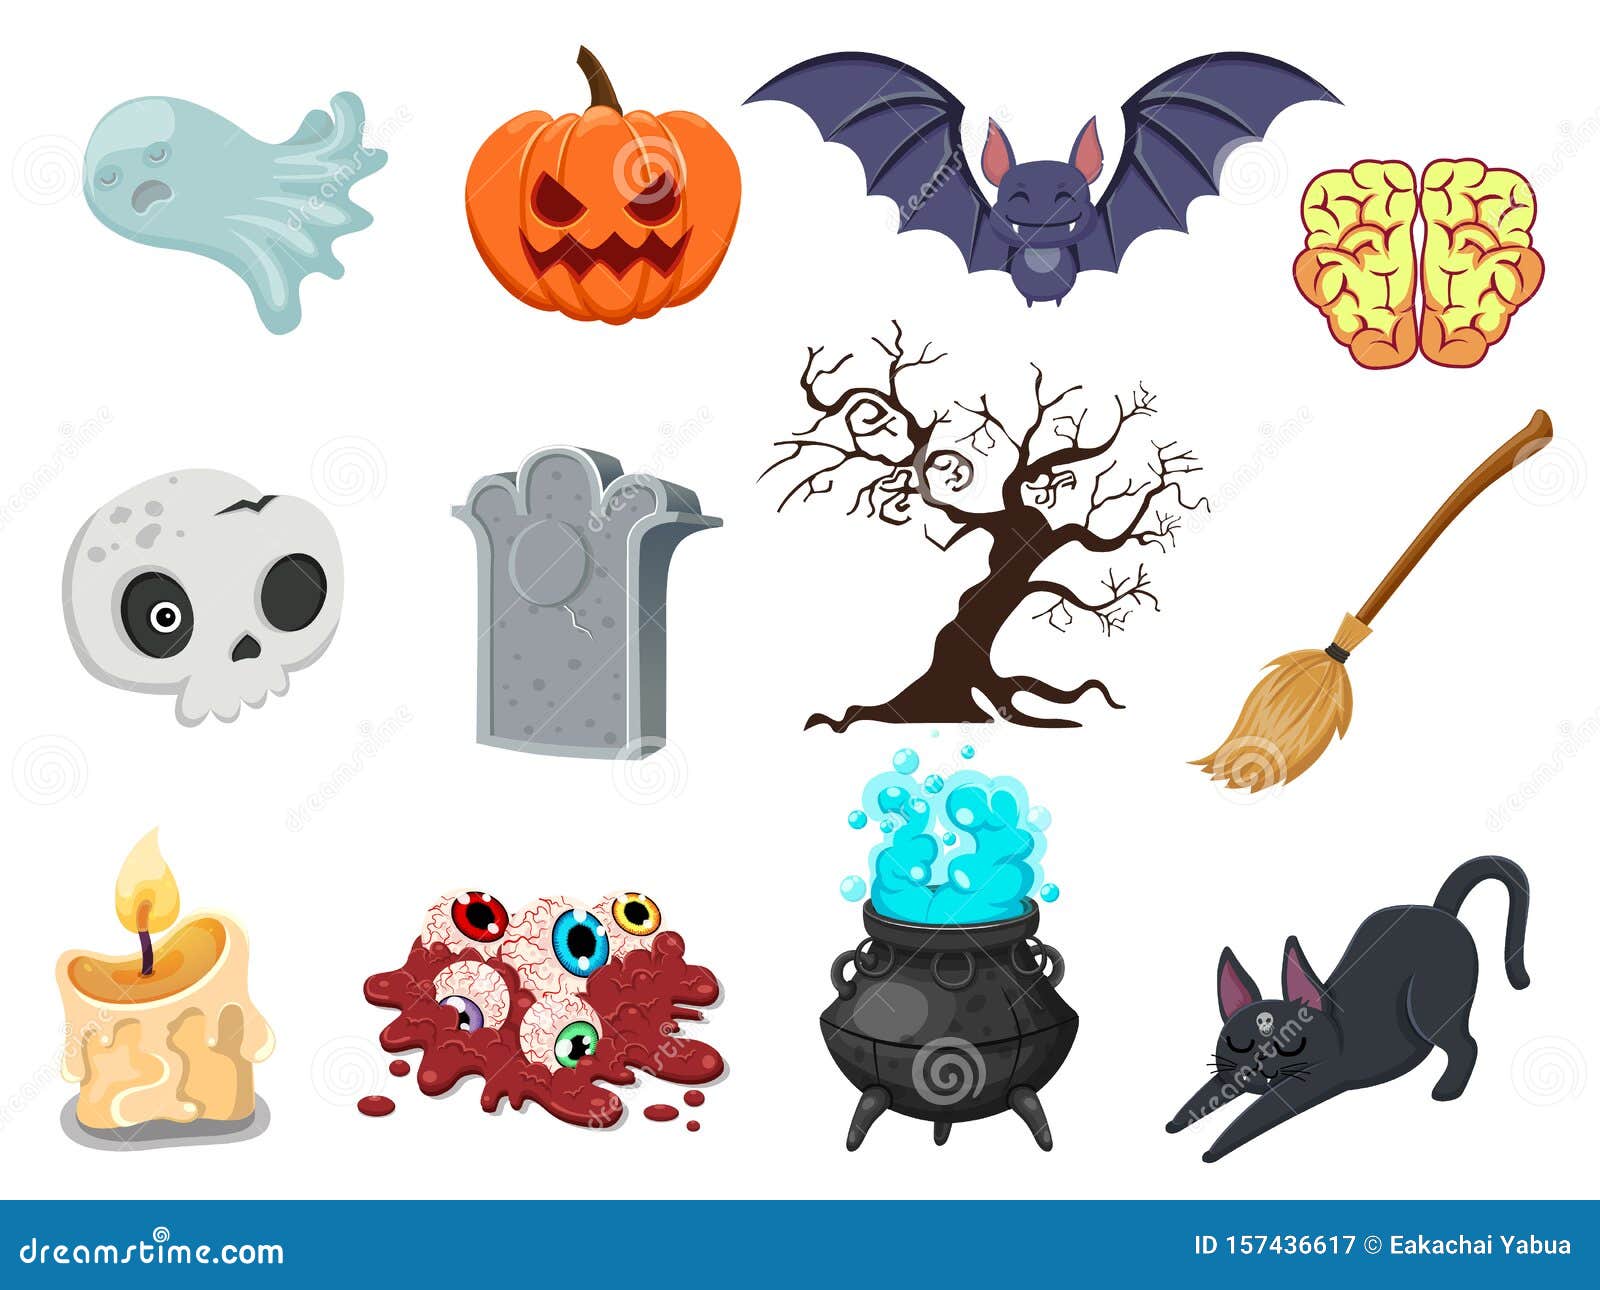 witch bats cat Dracula Halloween Stickers 5 Sheets : Pumpkin skull ghost 